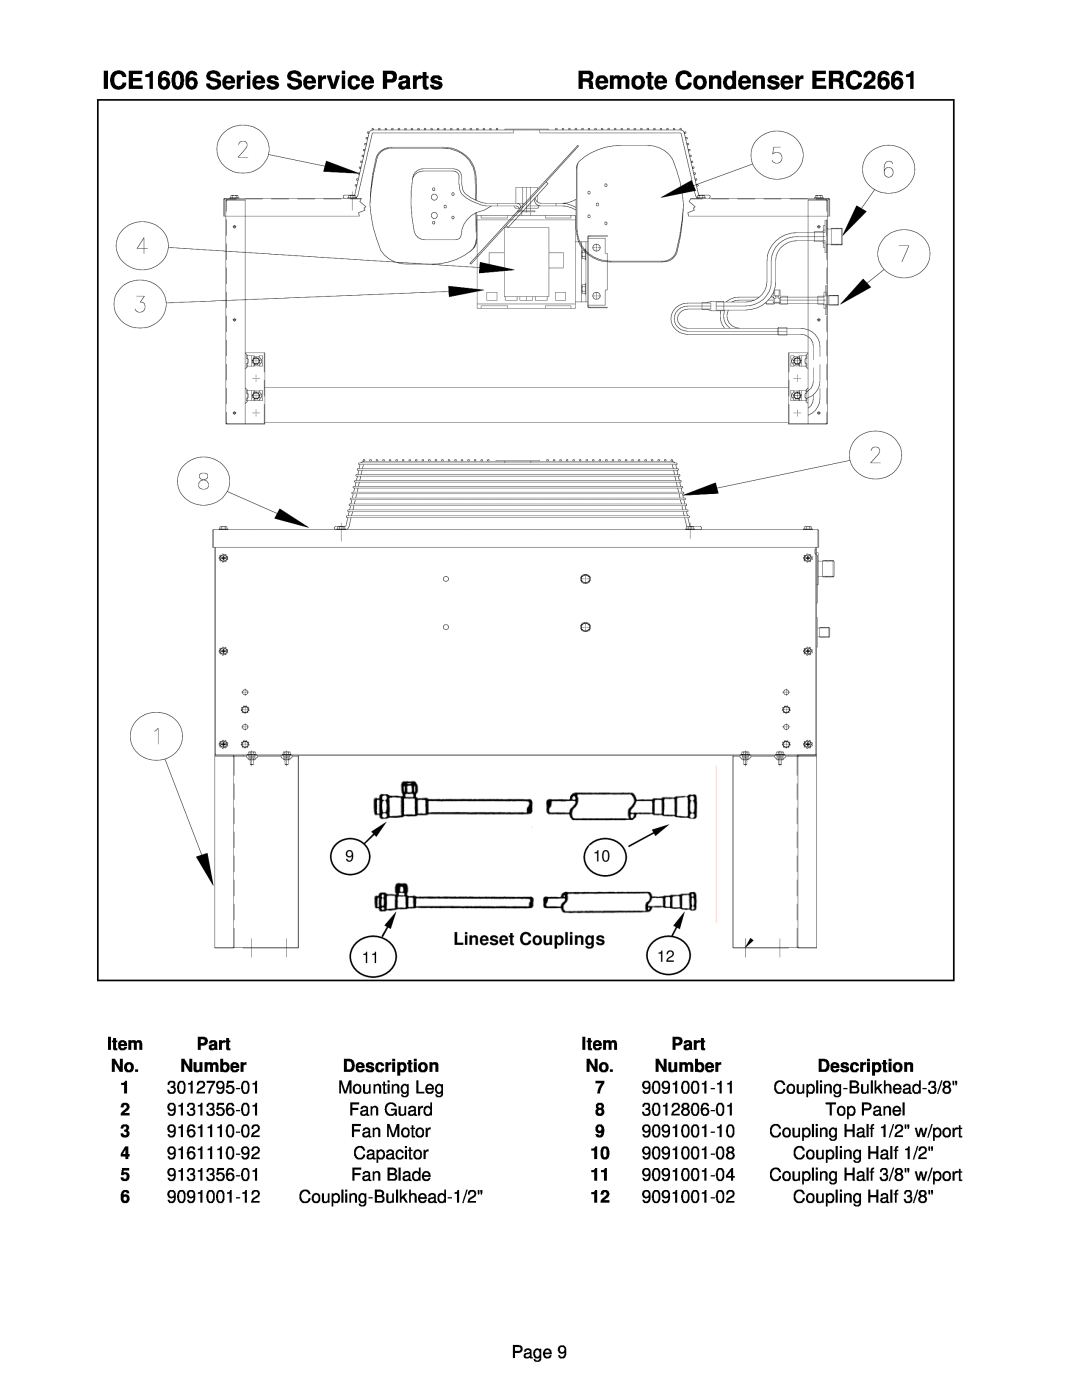 Ice-O-Matic manual Remote Condenser ERC2661, ICE1606 Series Service Parts 